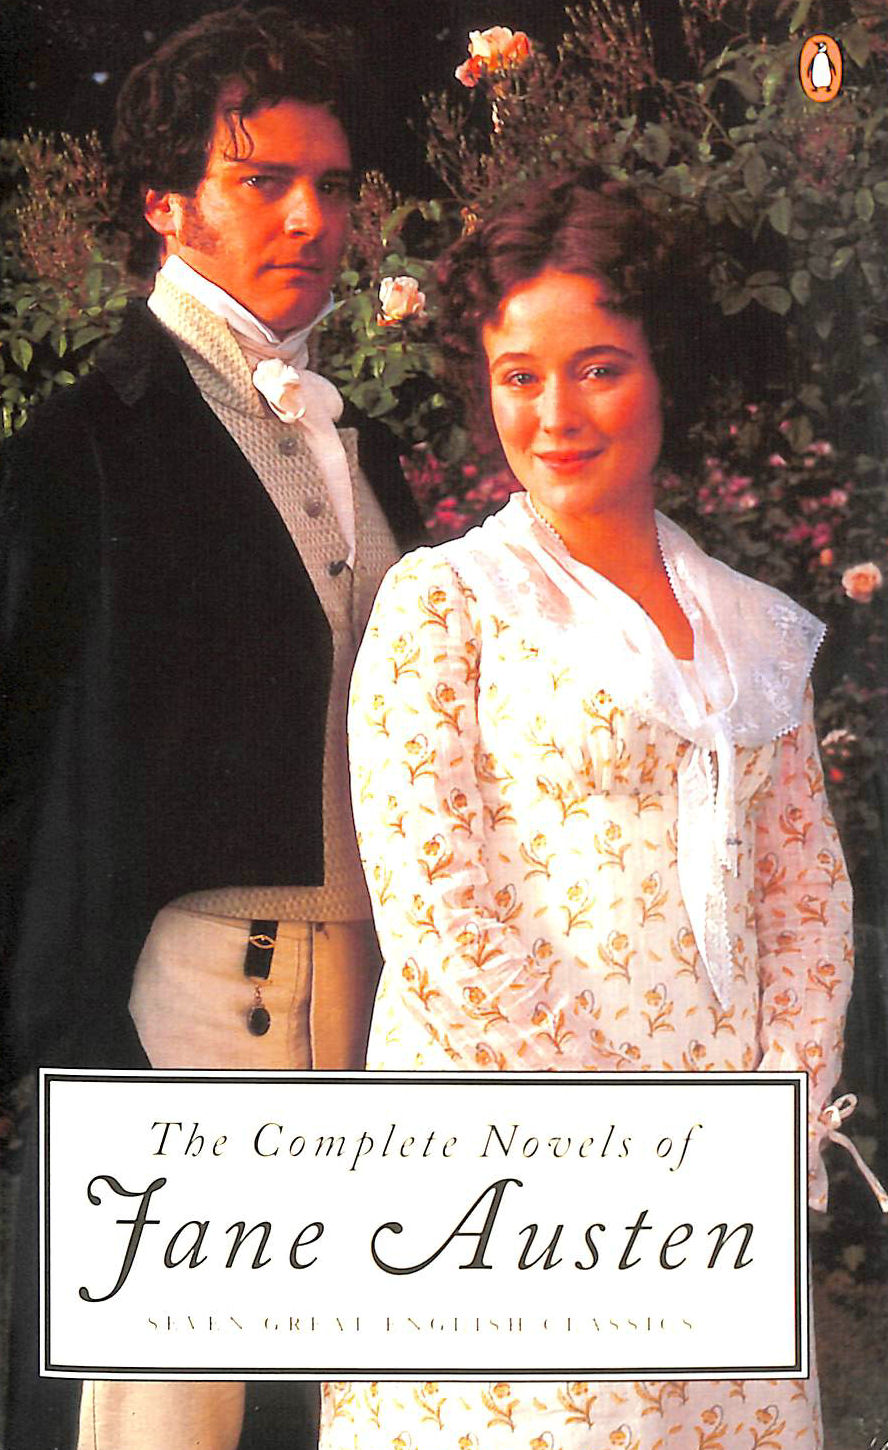 AUSTEN, JANE - The Complete Novels of Jane Austen: Seven Great English Classics